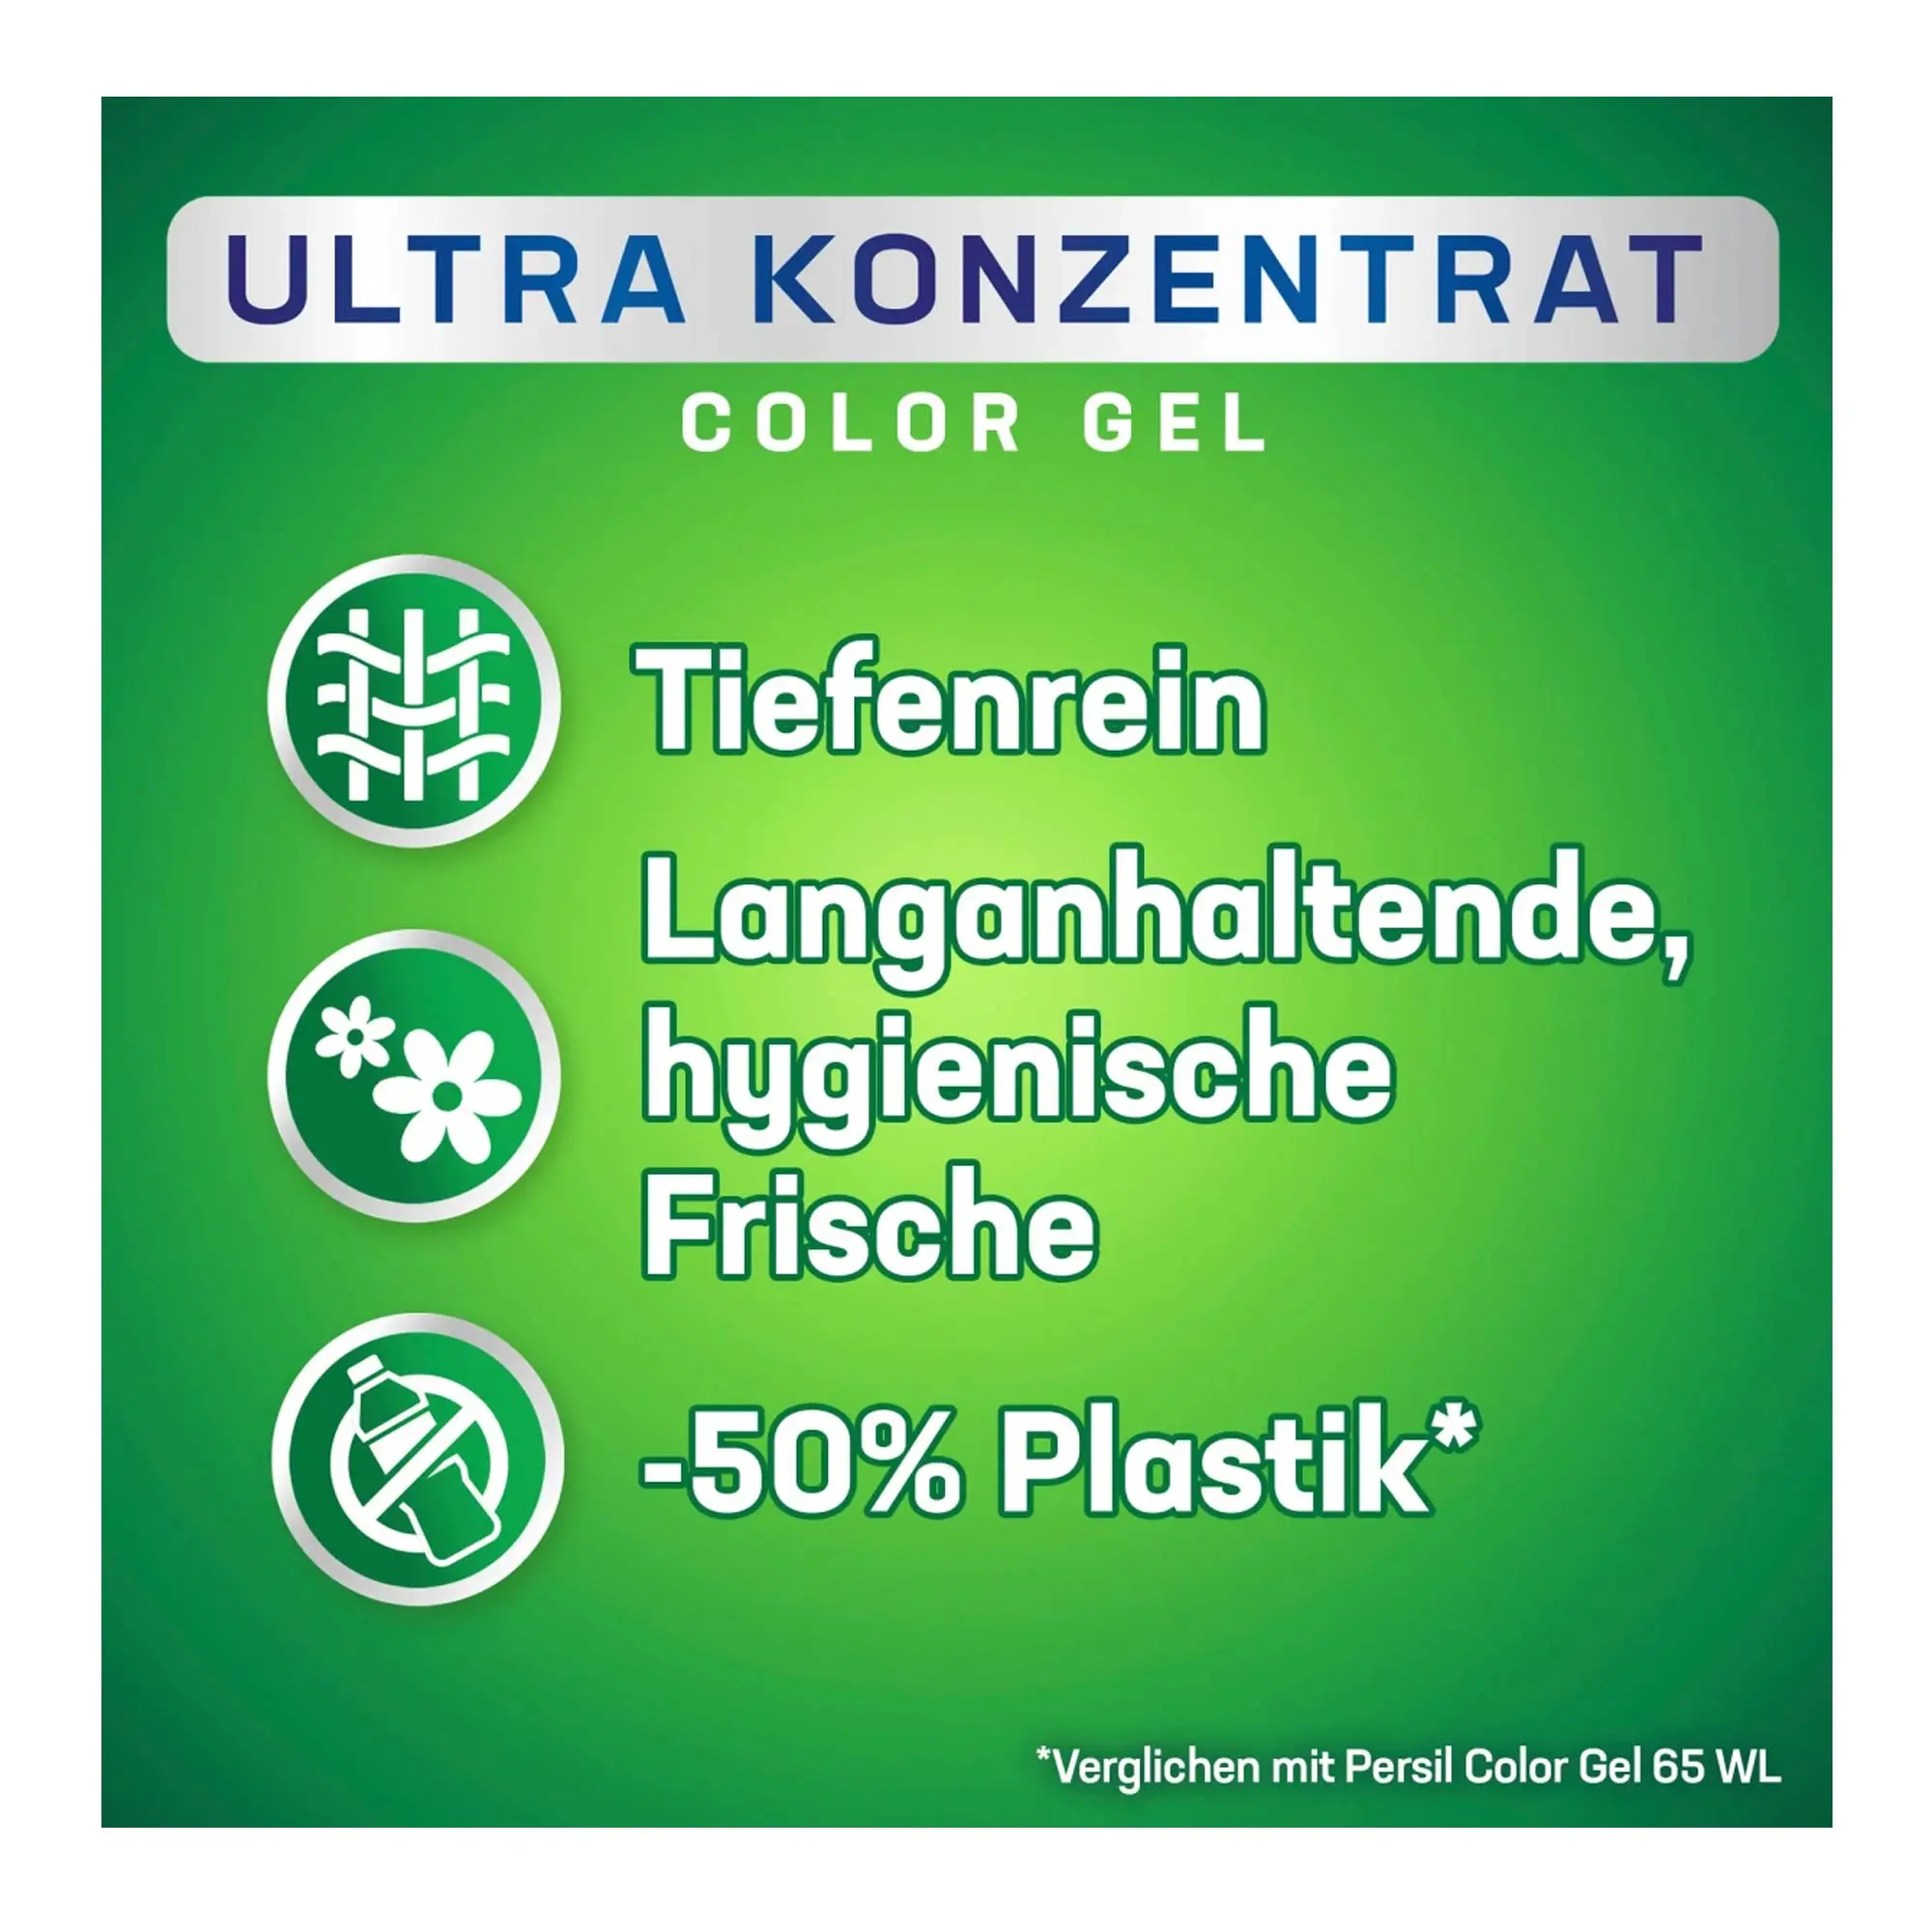 Persil Ultra Konzentrat Color Gel Colorwaschmittel, 130 Wl